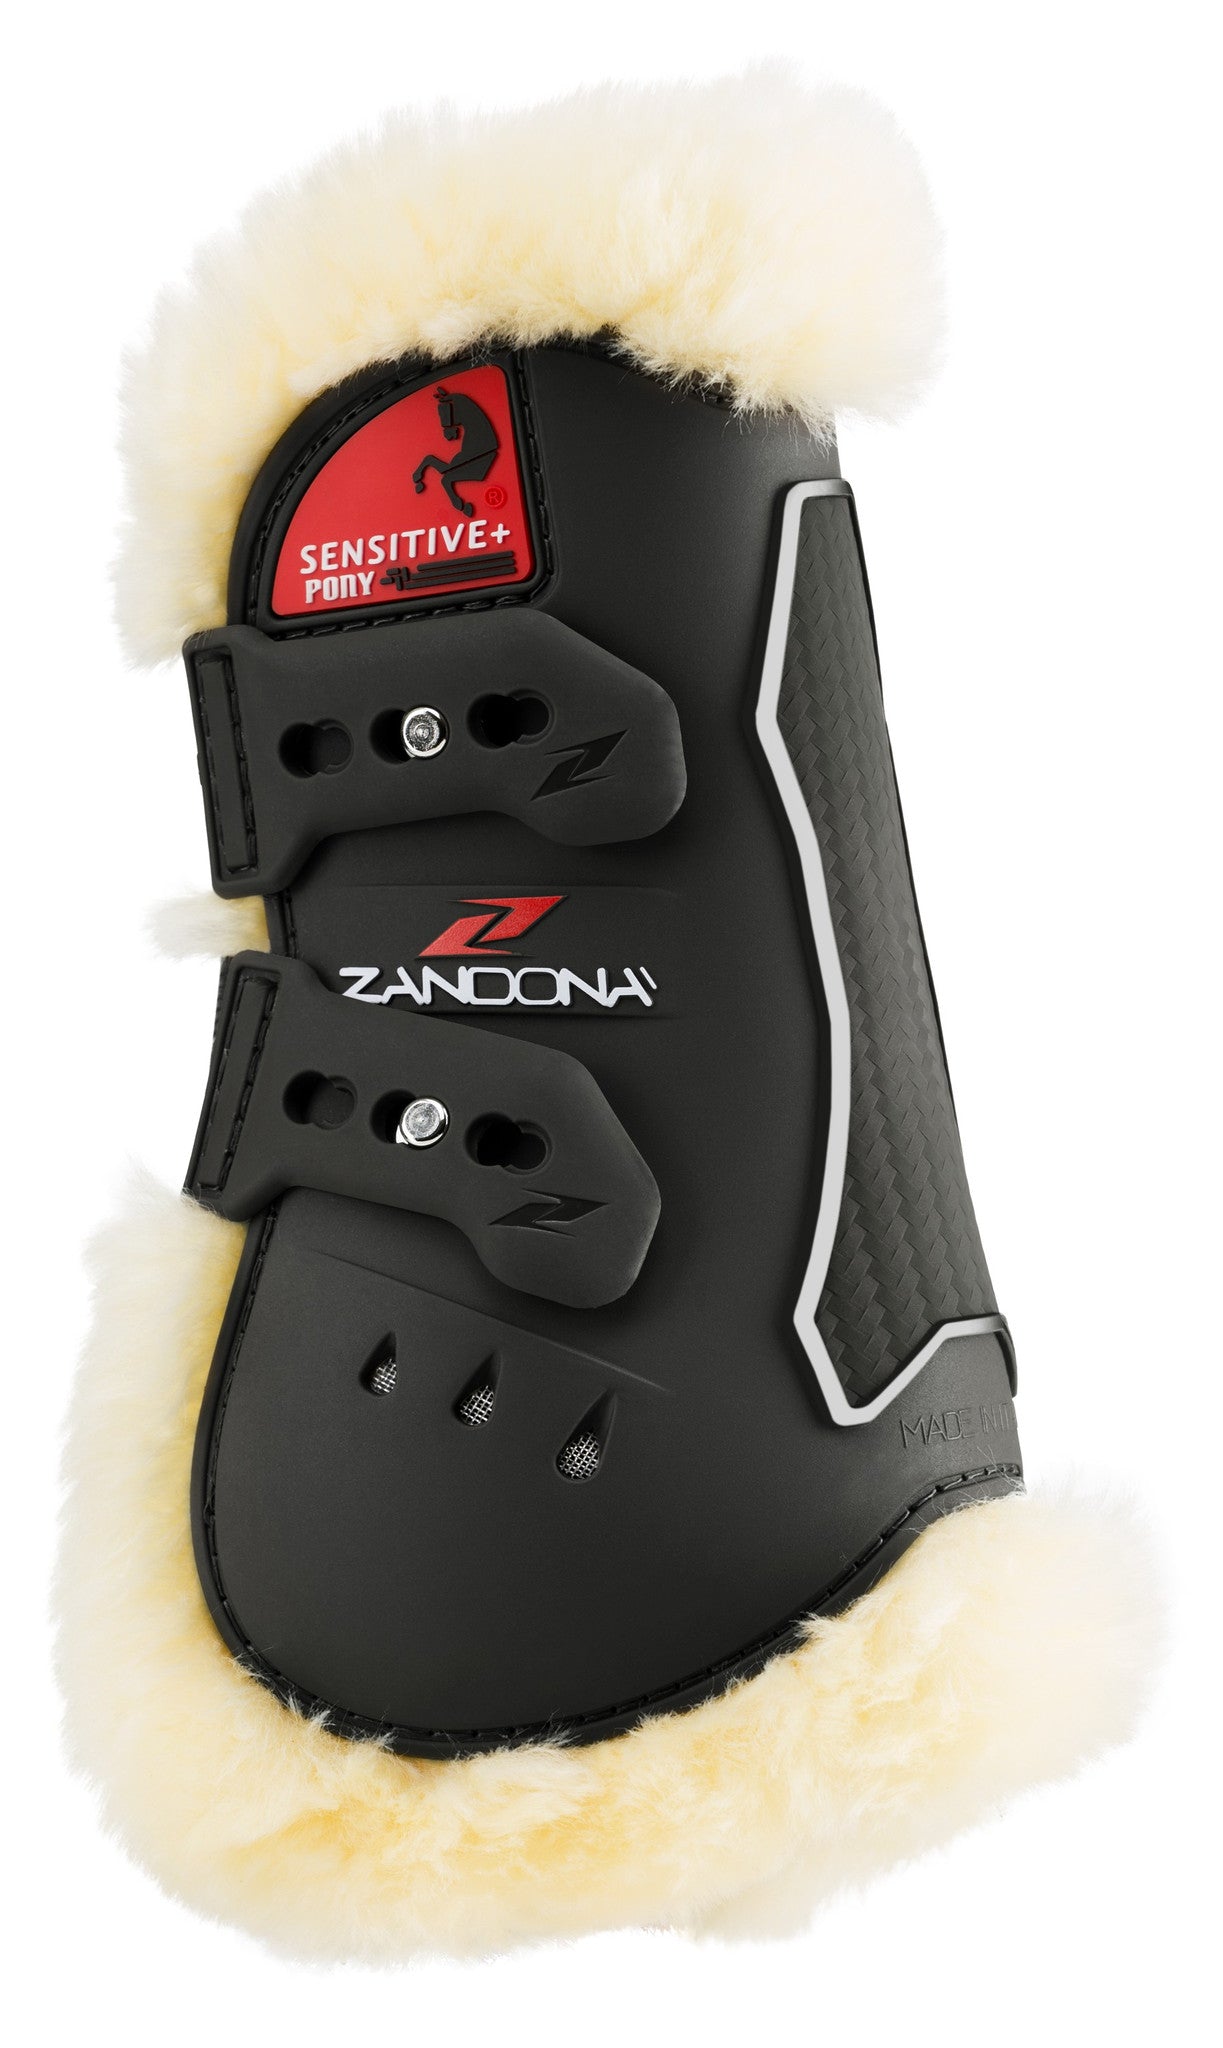 Zandon Pony Carbon Air Sensitive+ Tendon Boots